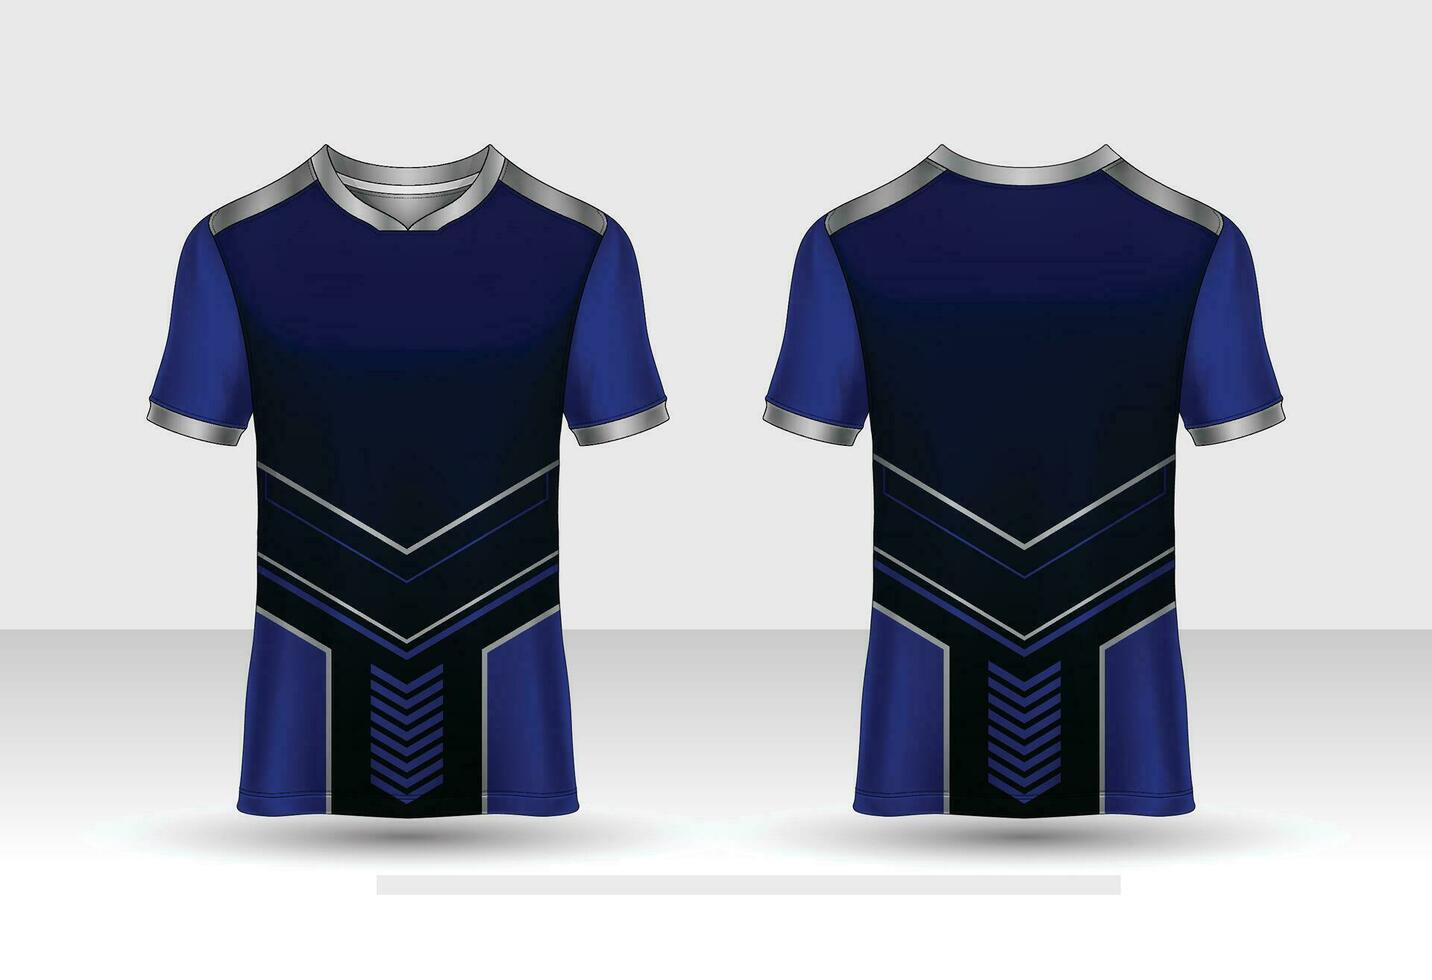 kleding stof textiel voor sport t-shirt ,voetbal Jersey mockup voor Amerikaans voetbal club. uniform voorkant en terug visie. vector